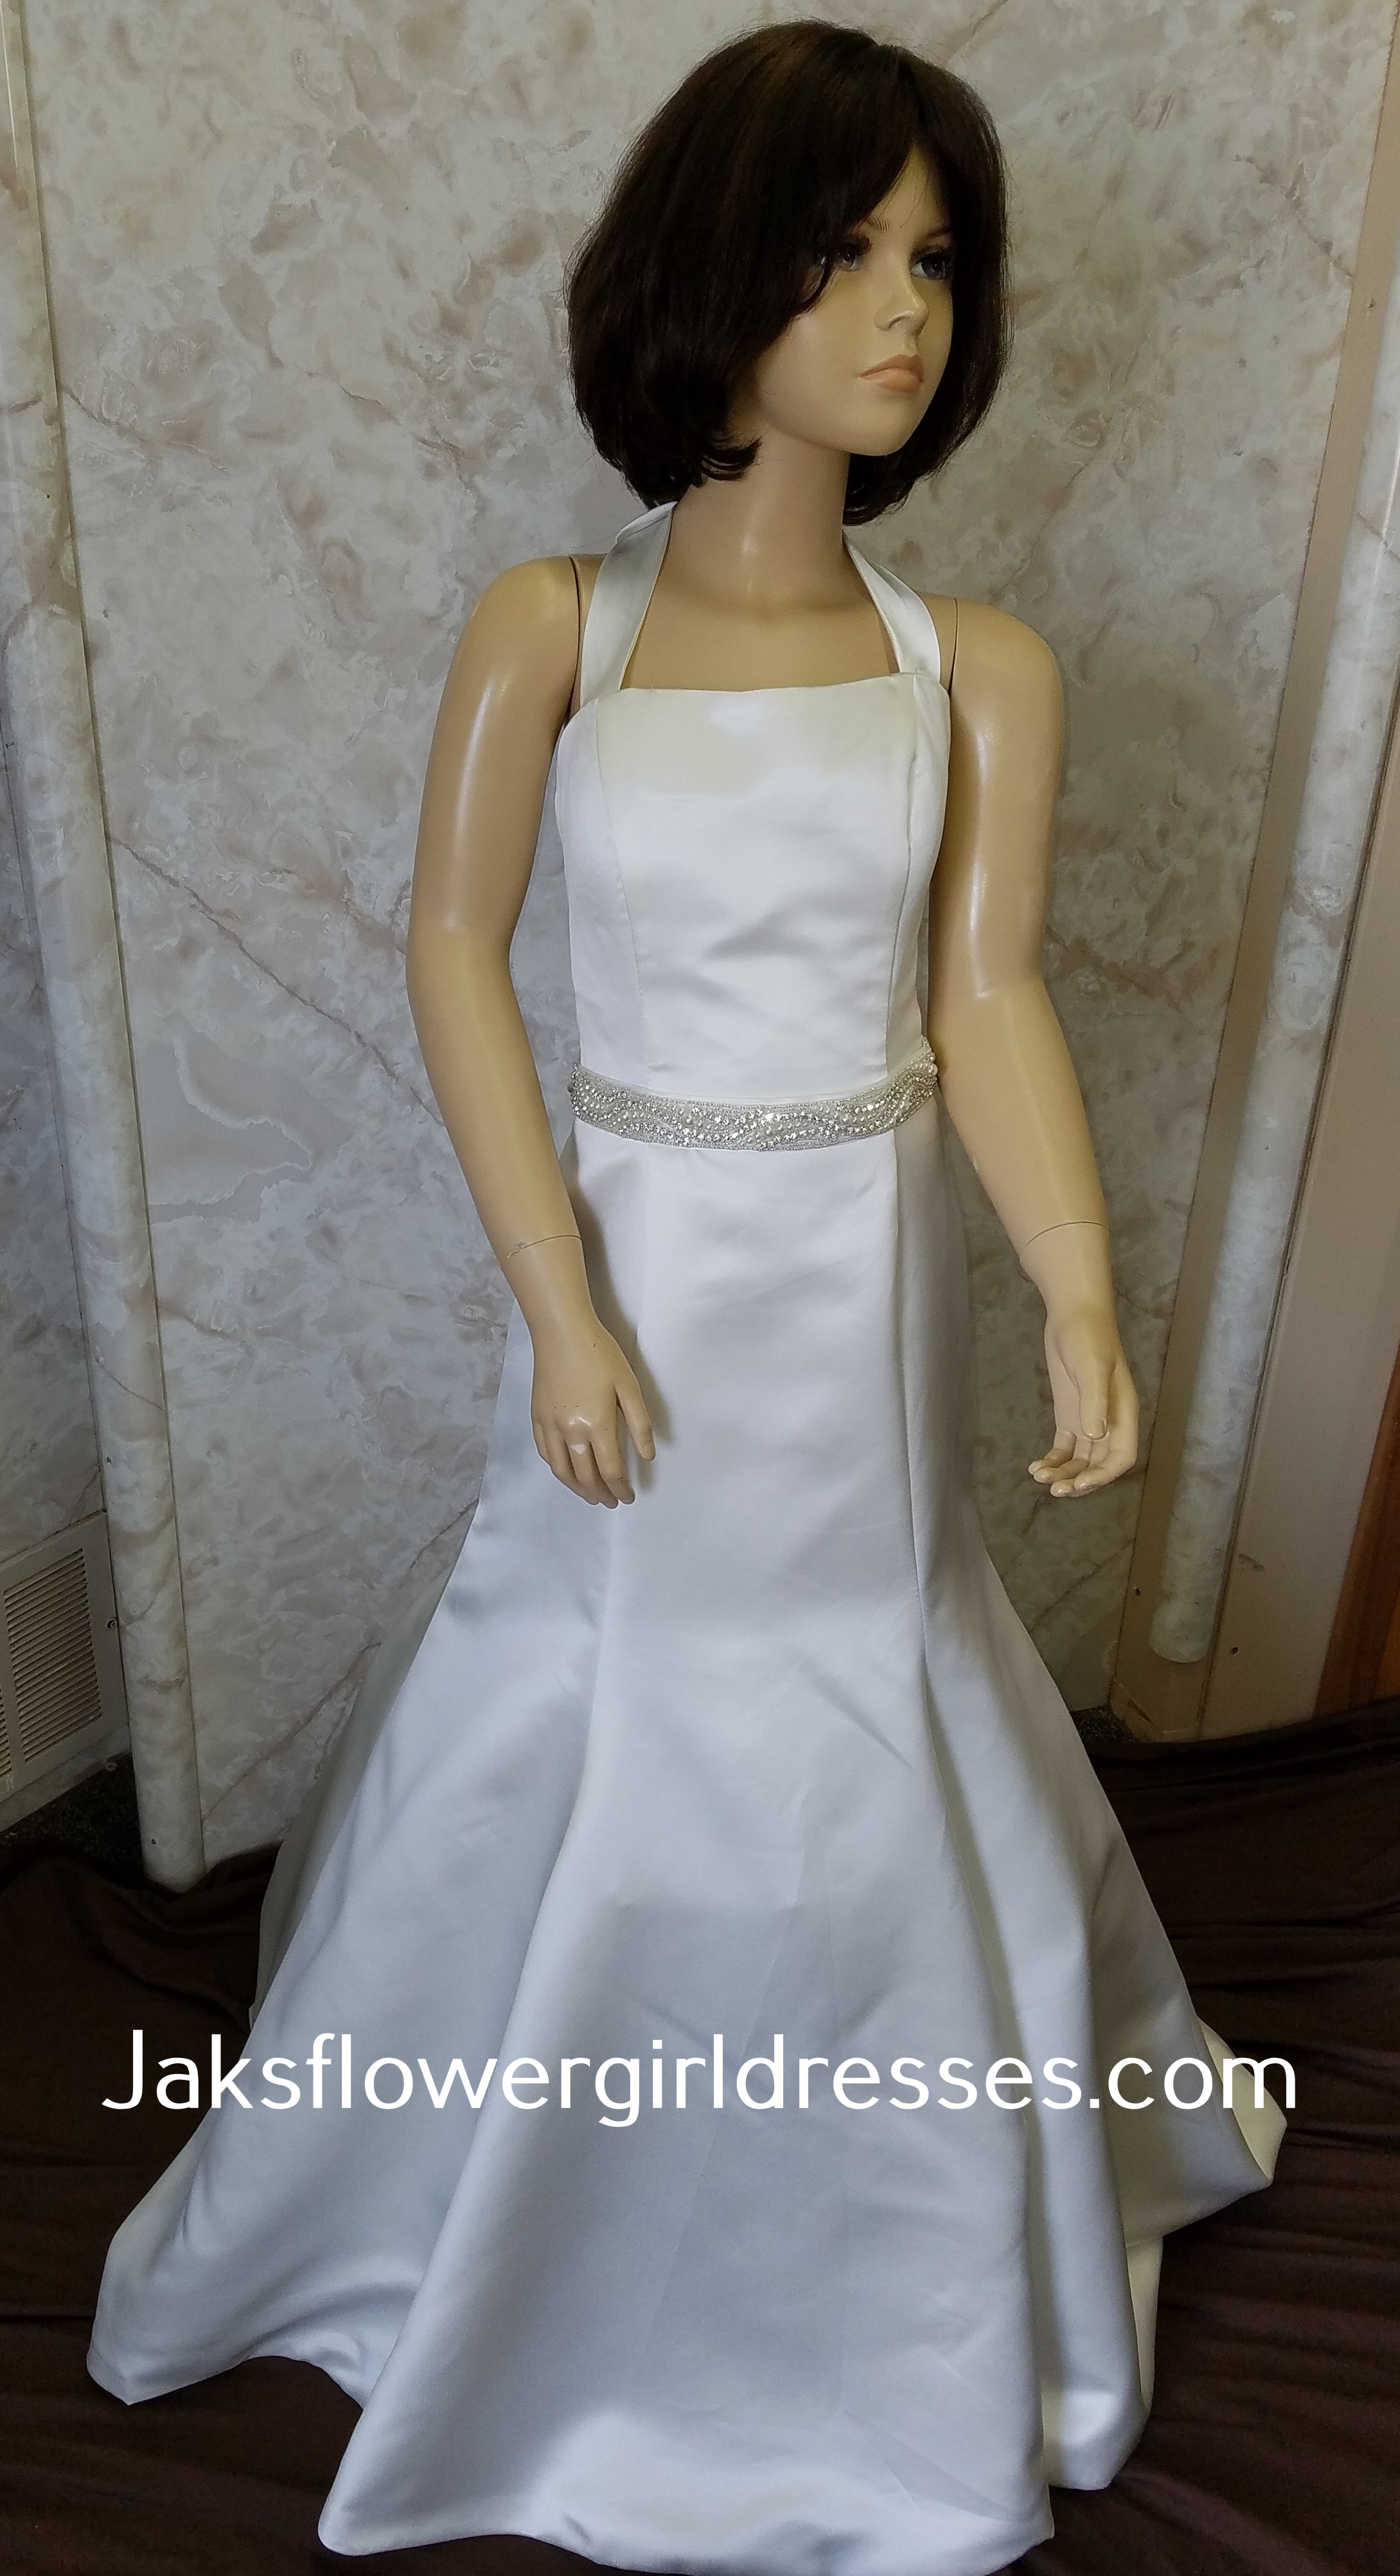 miniature bride trumpet gown